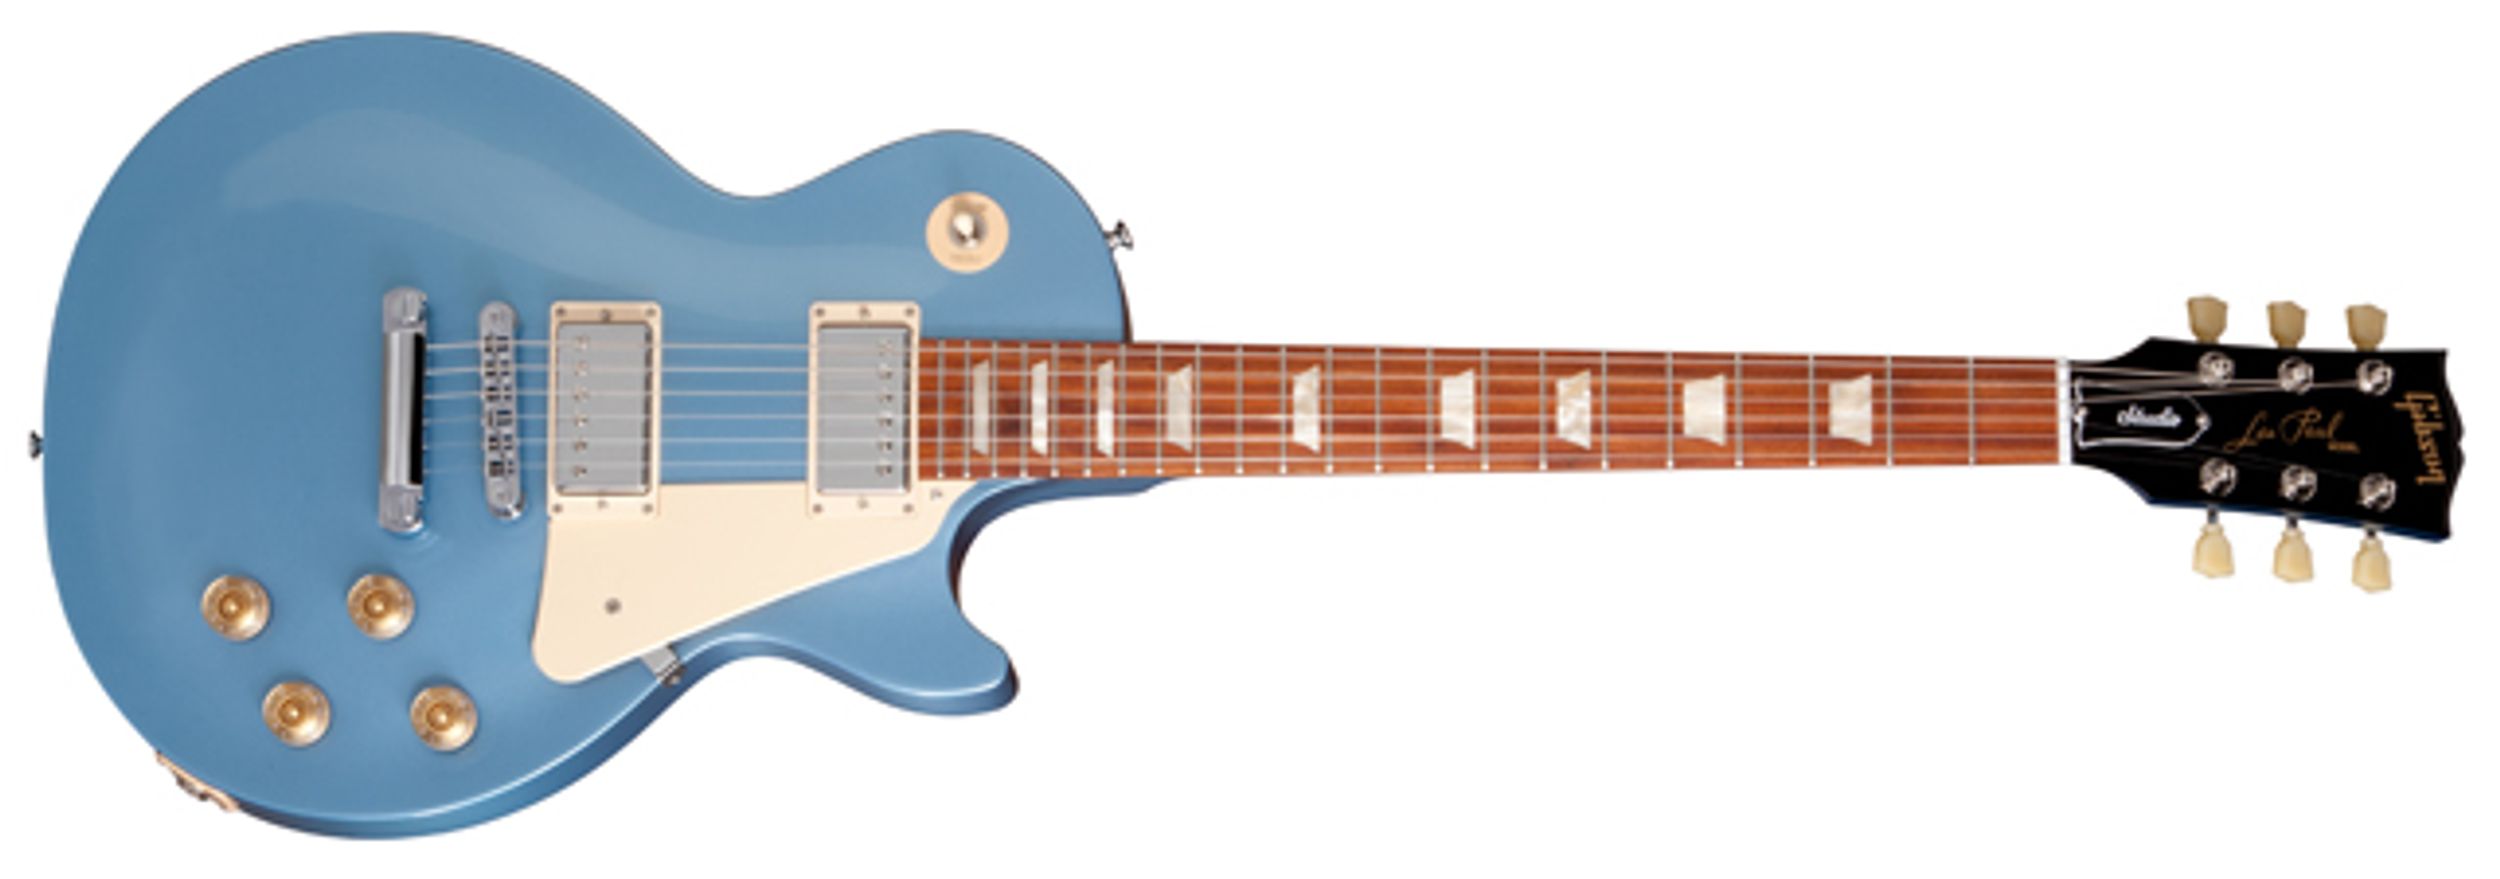 Gibson Les Paul Studio Electric Guitar Review